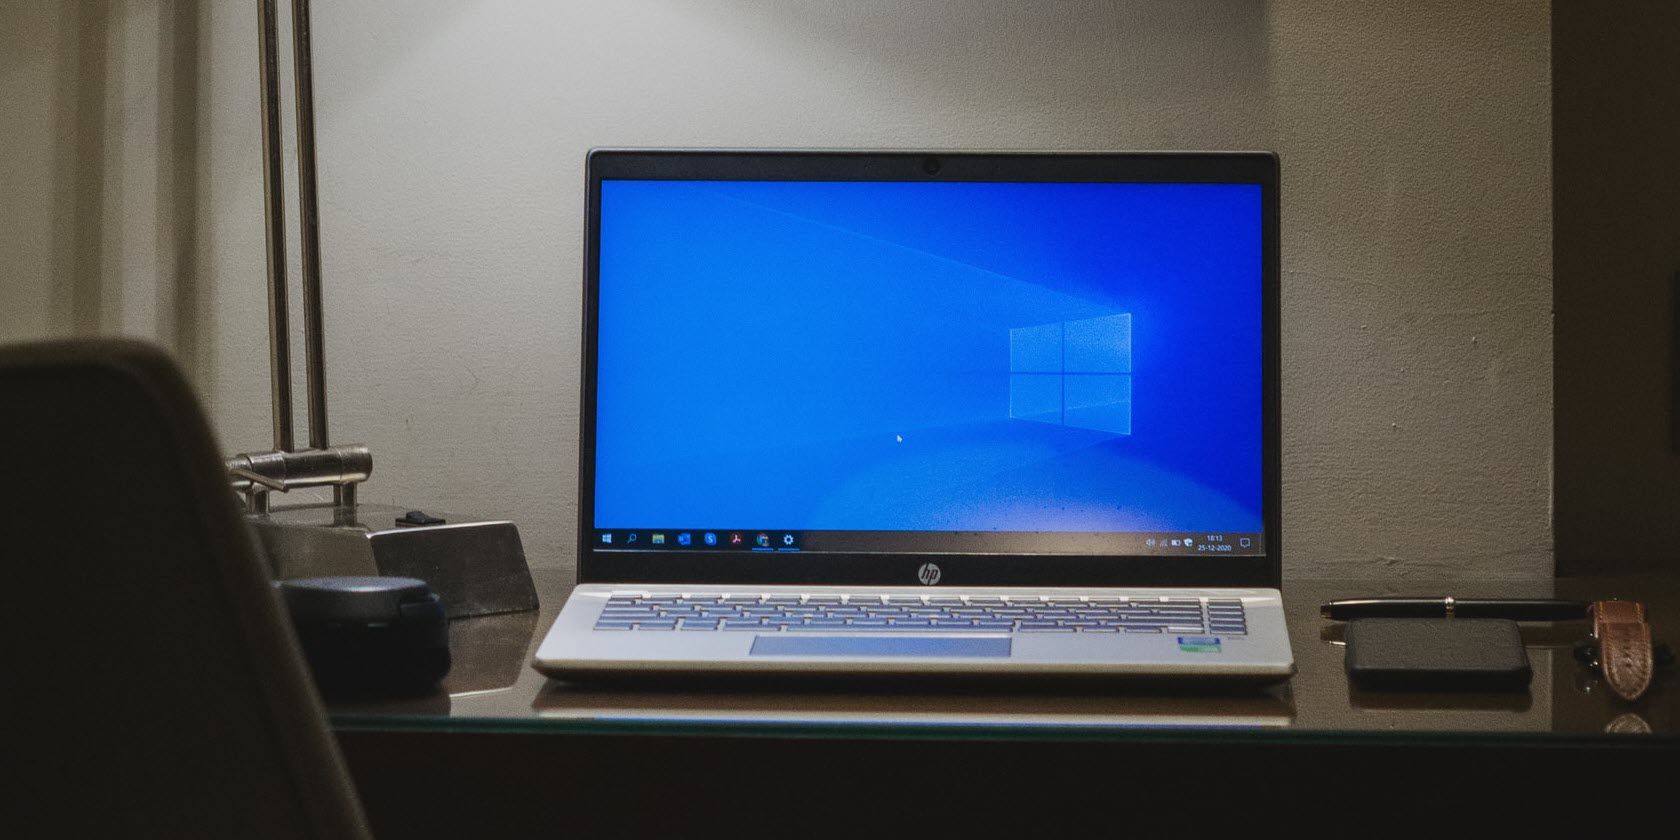 HP windows laptop on a desk